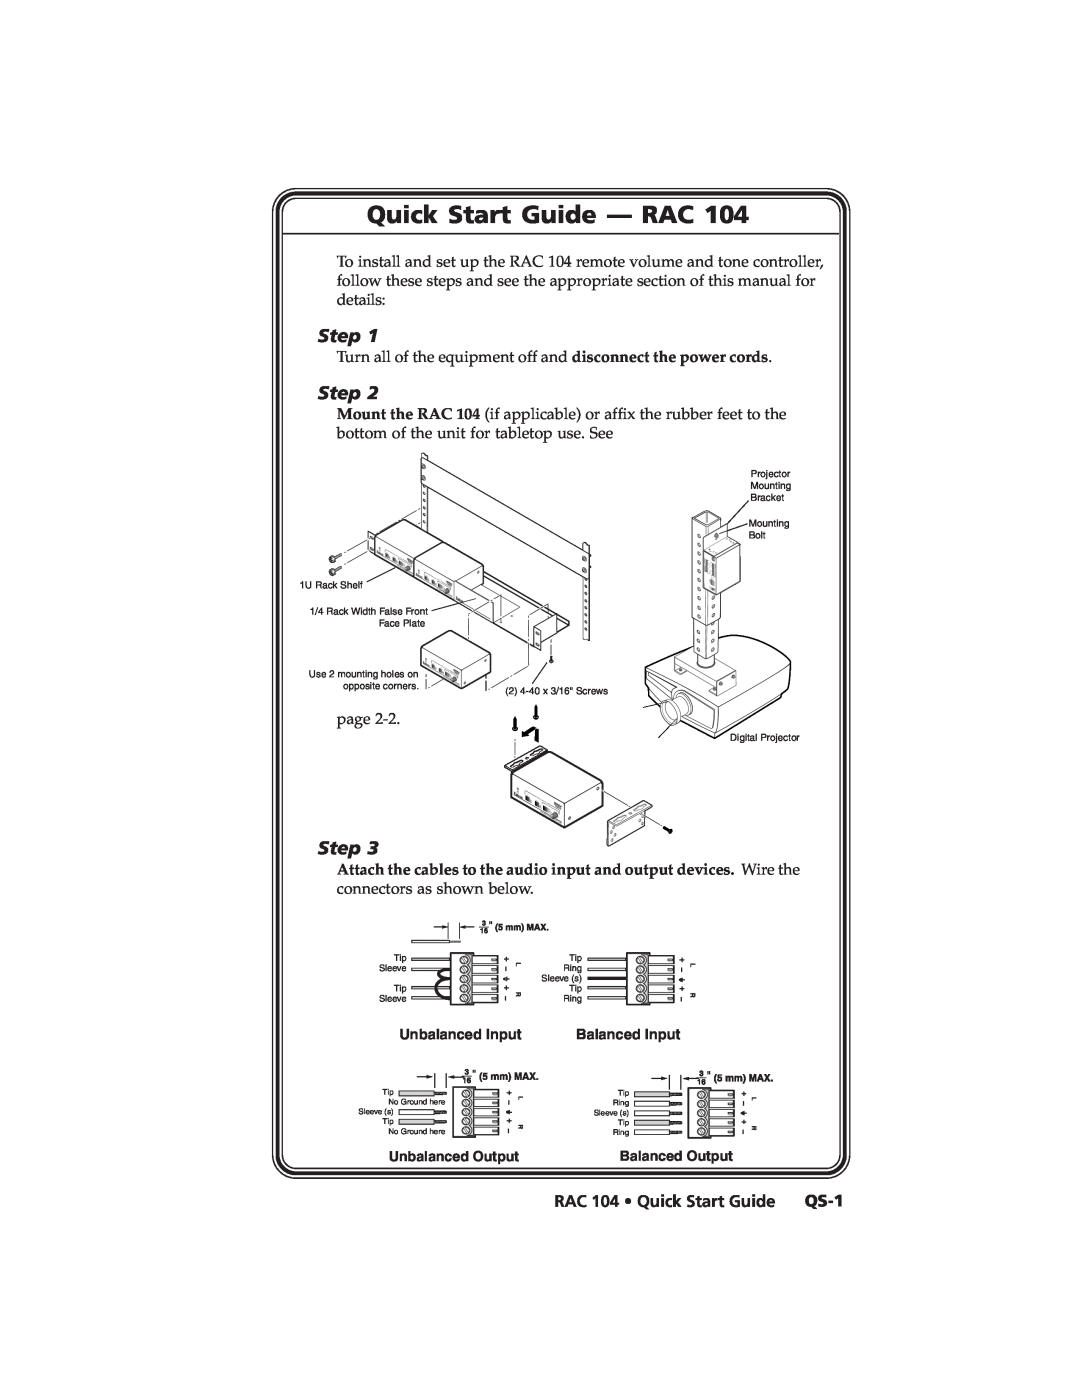 Extron electronic user manual Quick Start Guide - RAC, Step, RAC 104 Quick Start Guide QS-1 